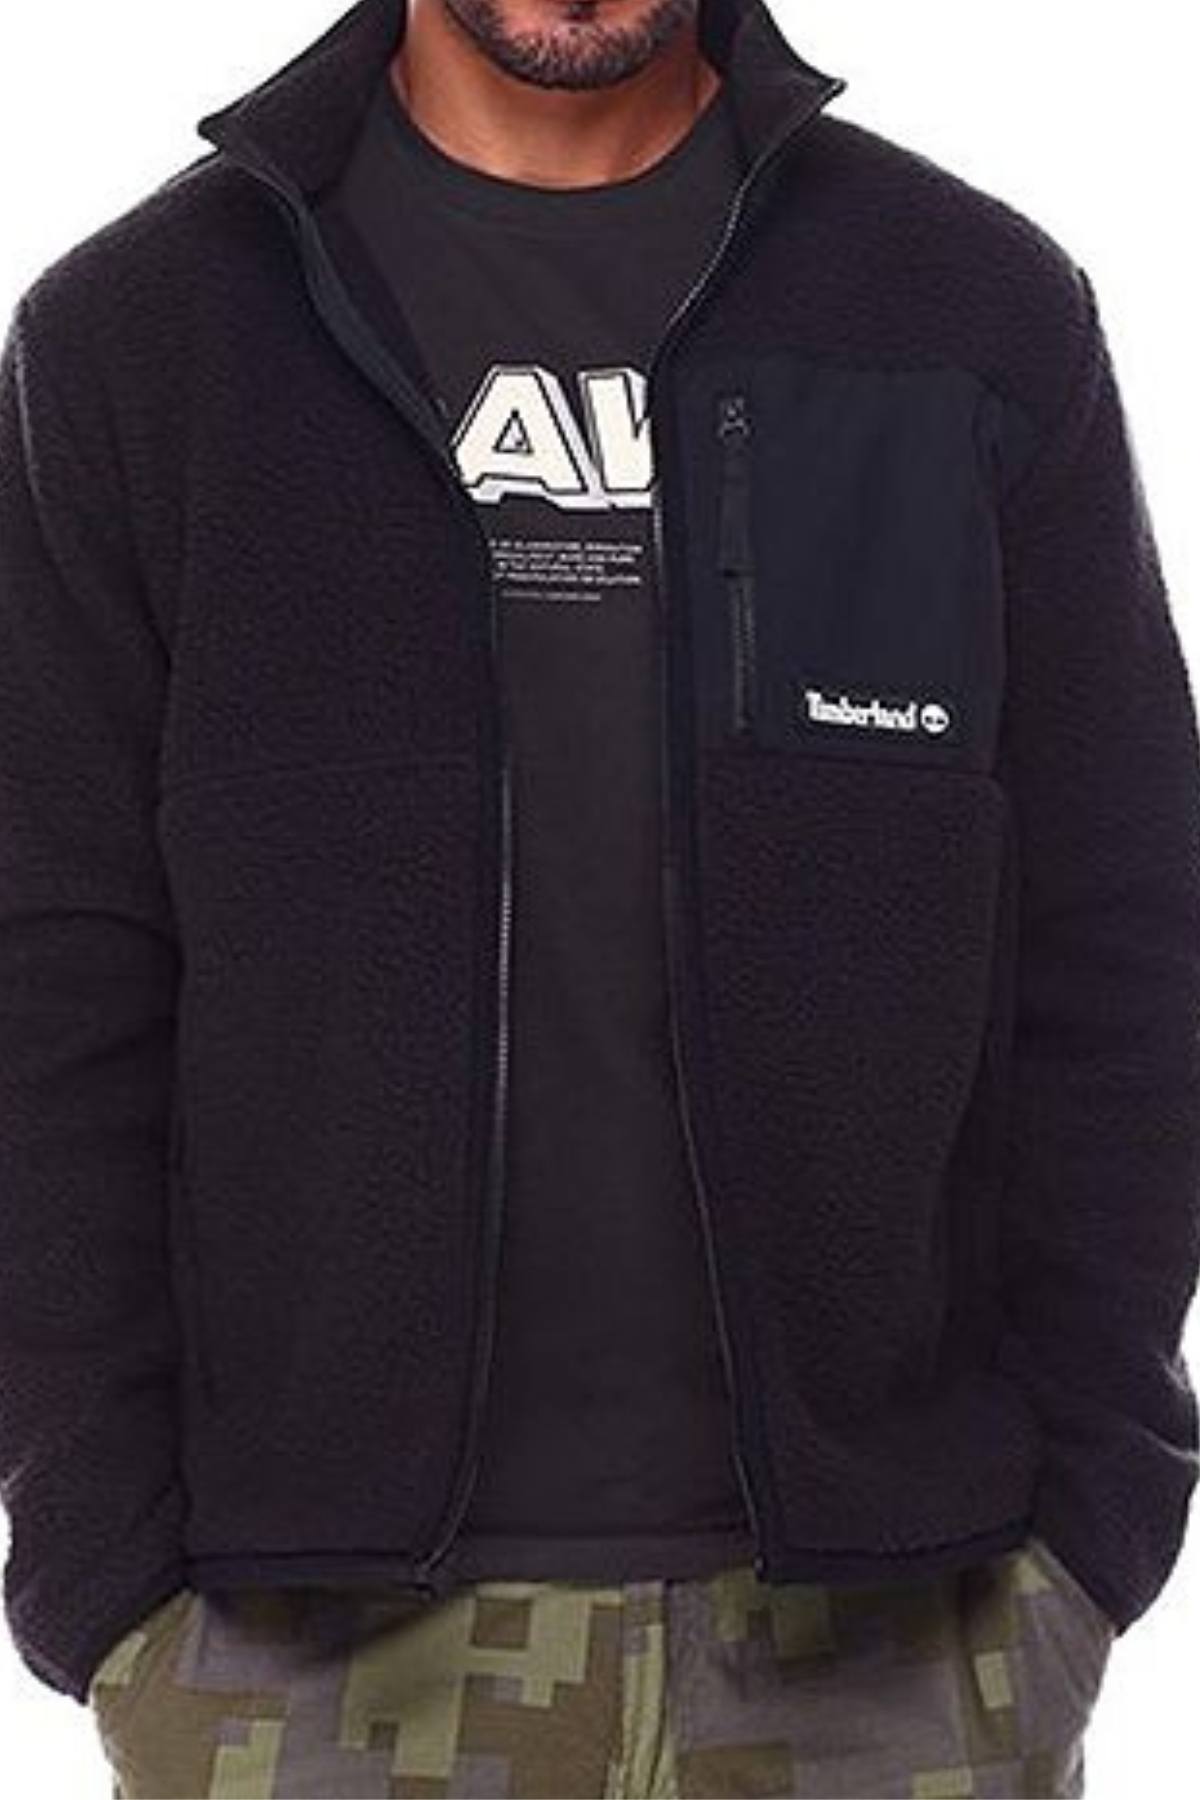 Timberland Yc Outdoor Archive Colorbvlocked Fleece Jacket Black